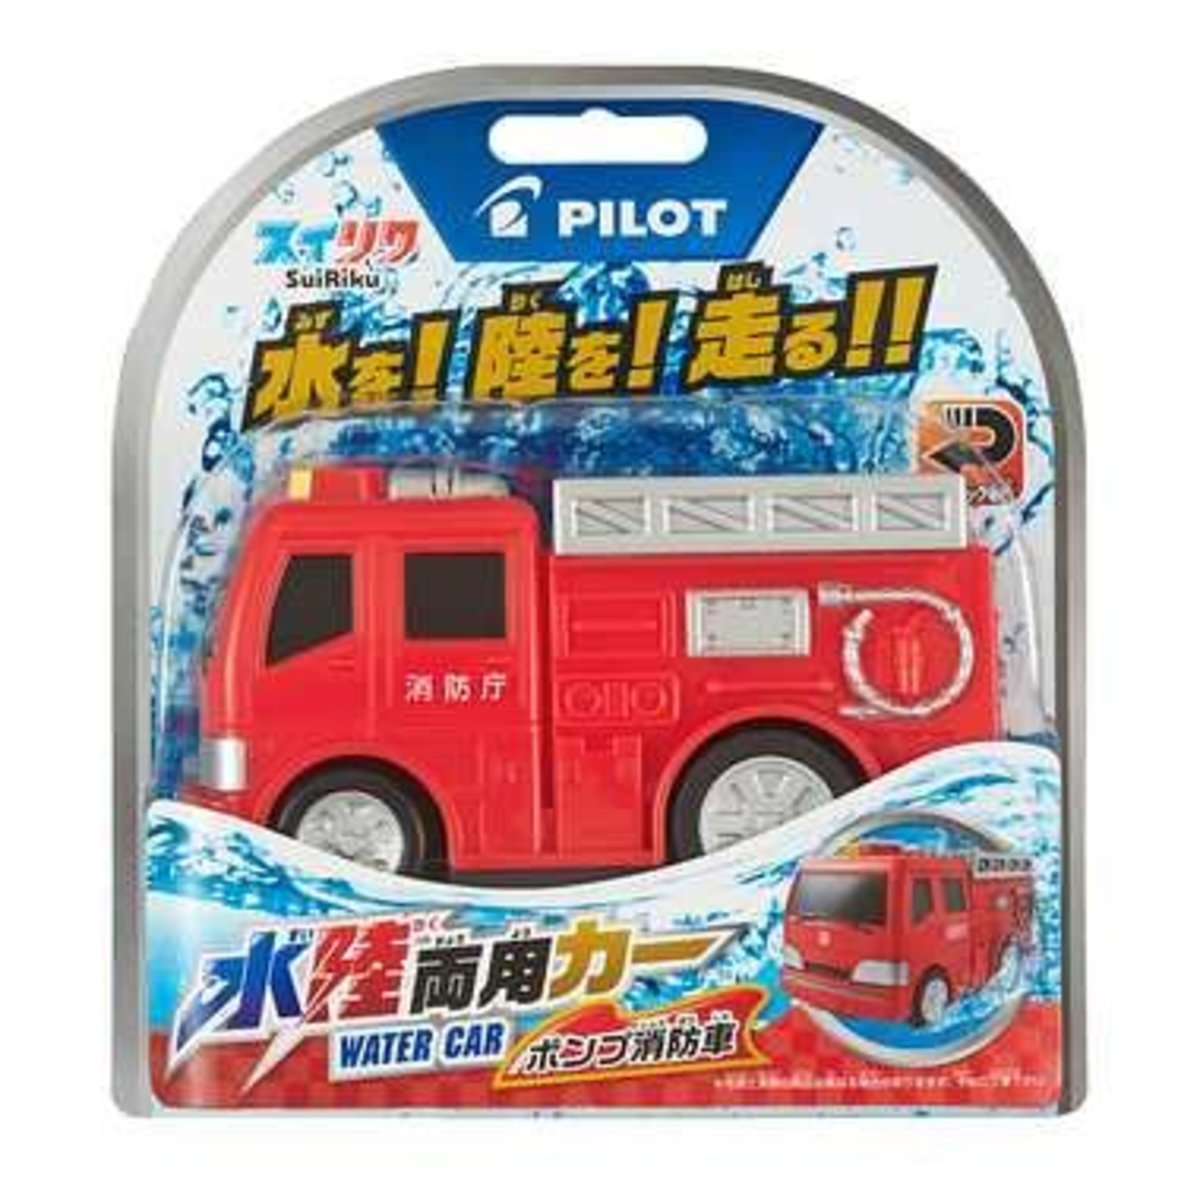 fire truck bath toy